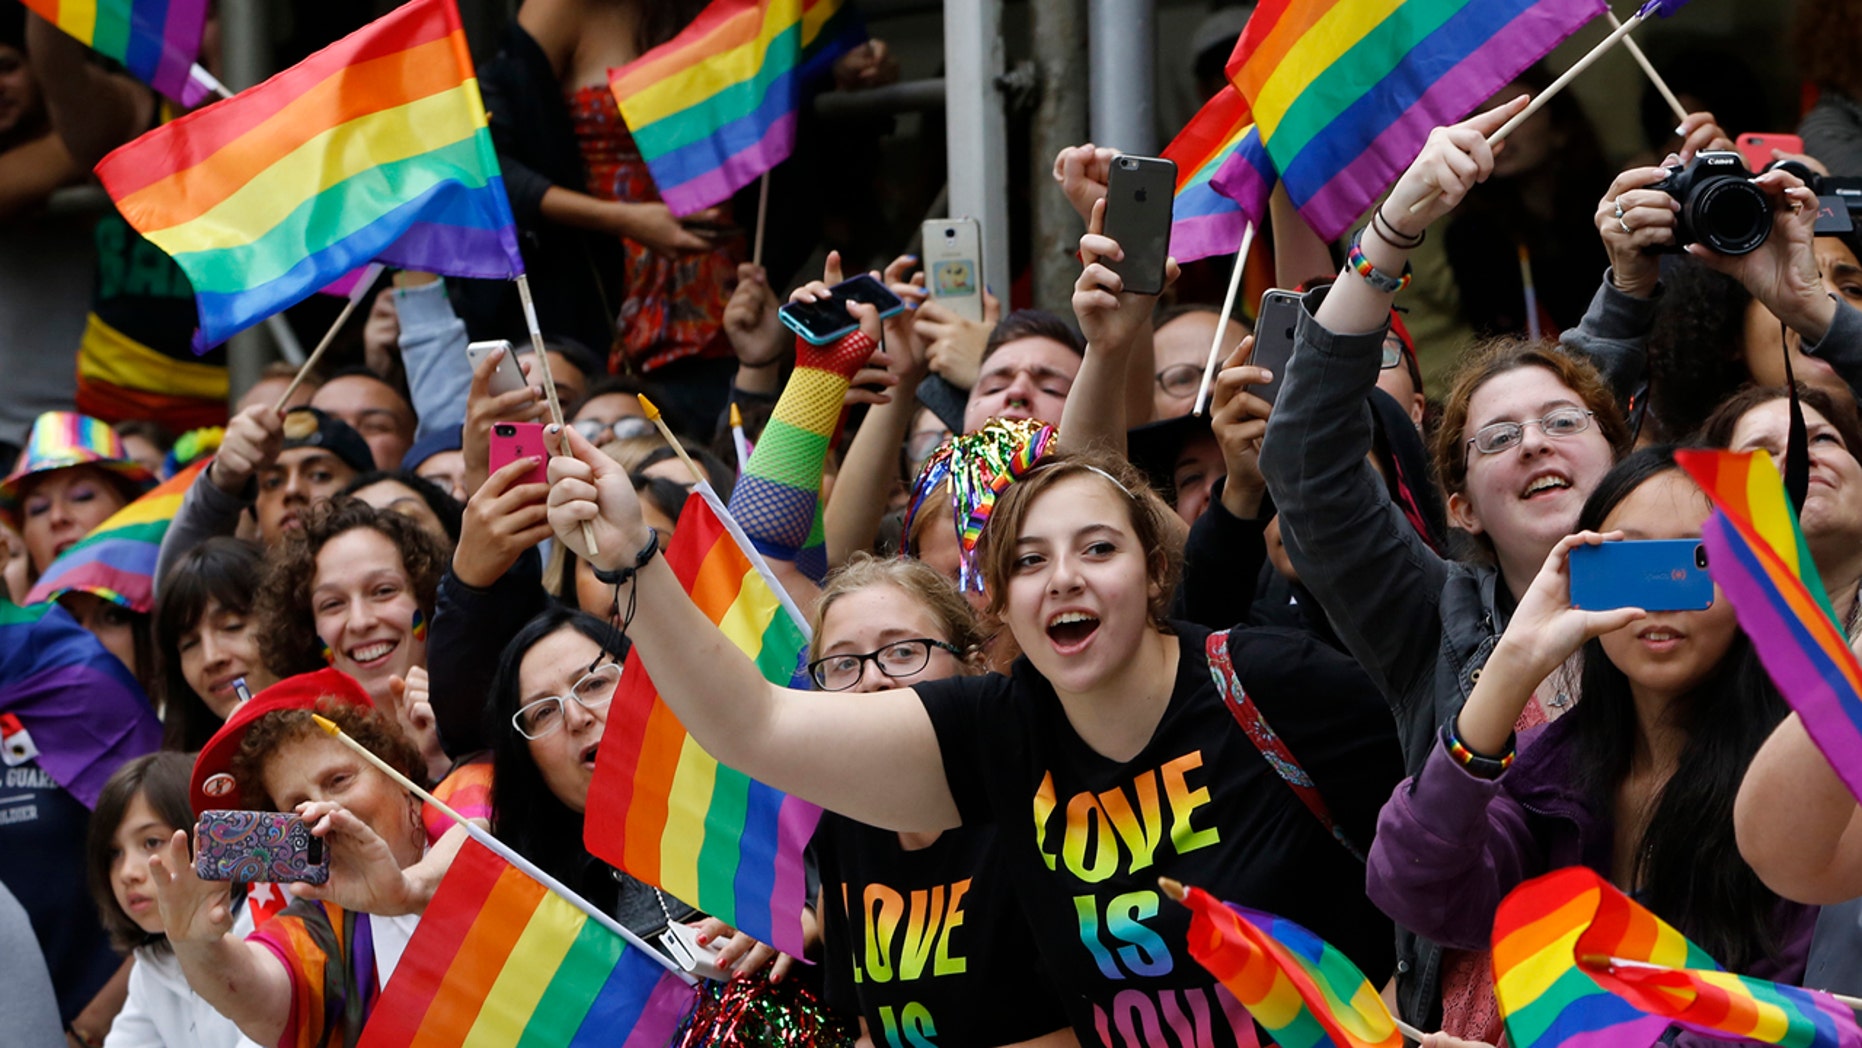 Celebration Defiance Mix At New York City Gay Pride Parade Fox News